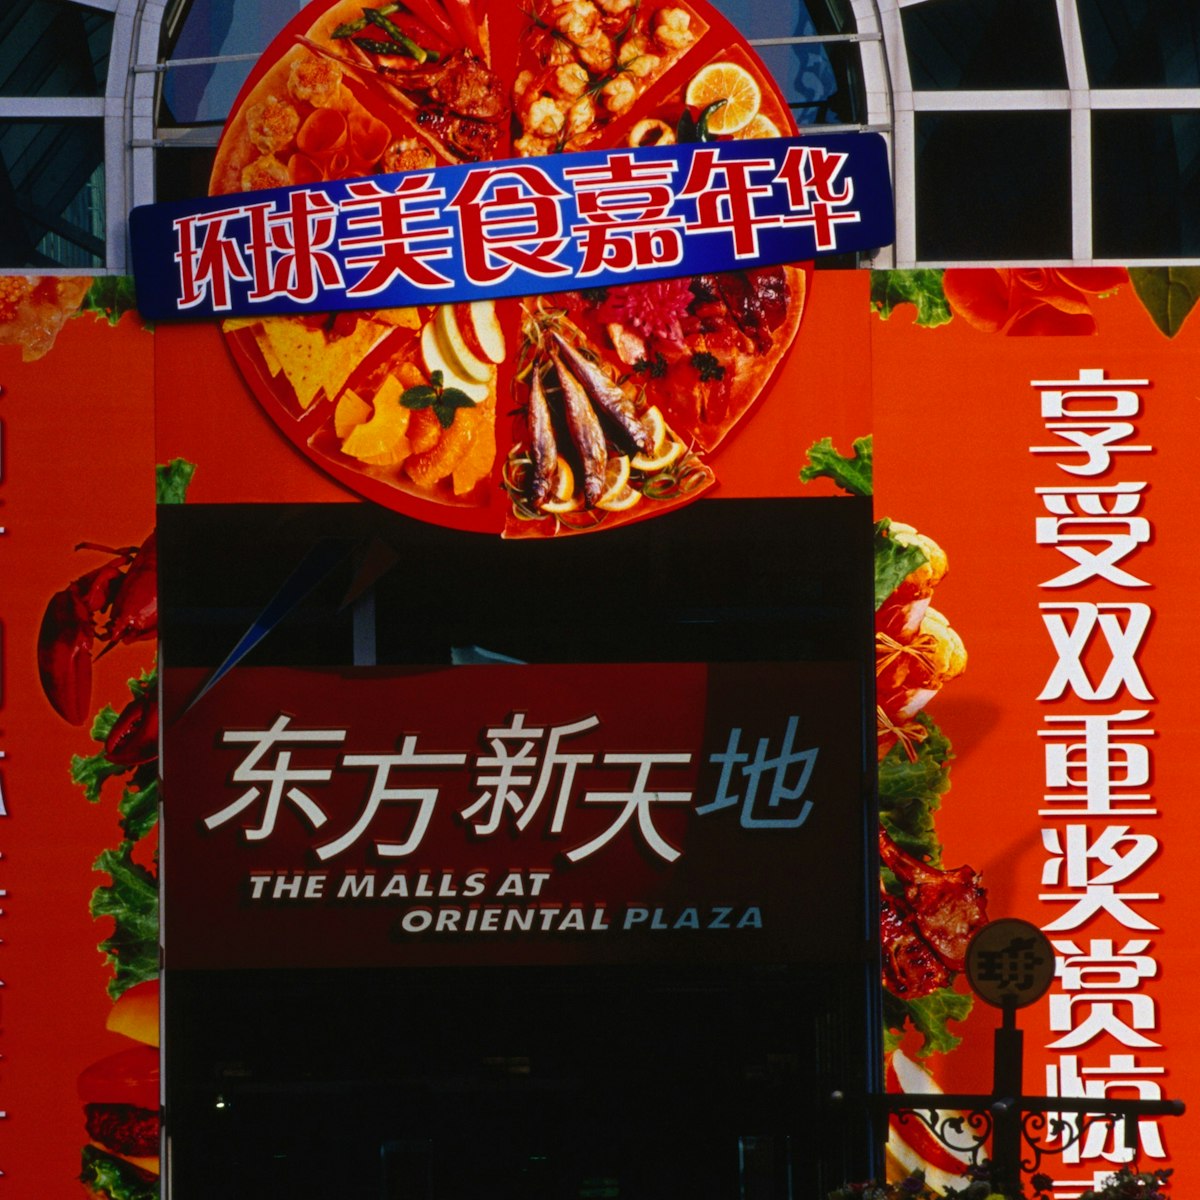 Entrance to Beijing's Oriental Plaza.